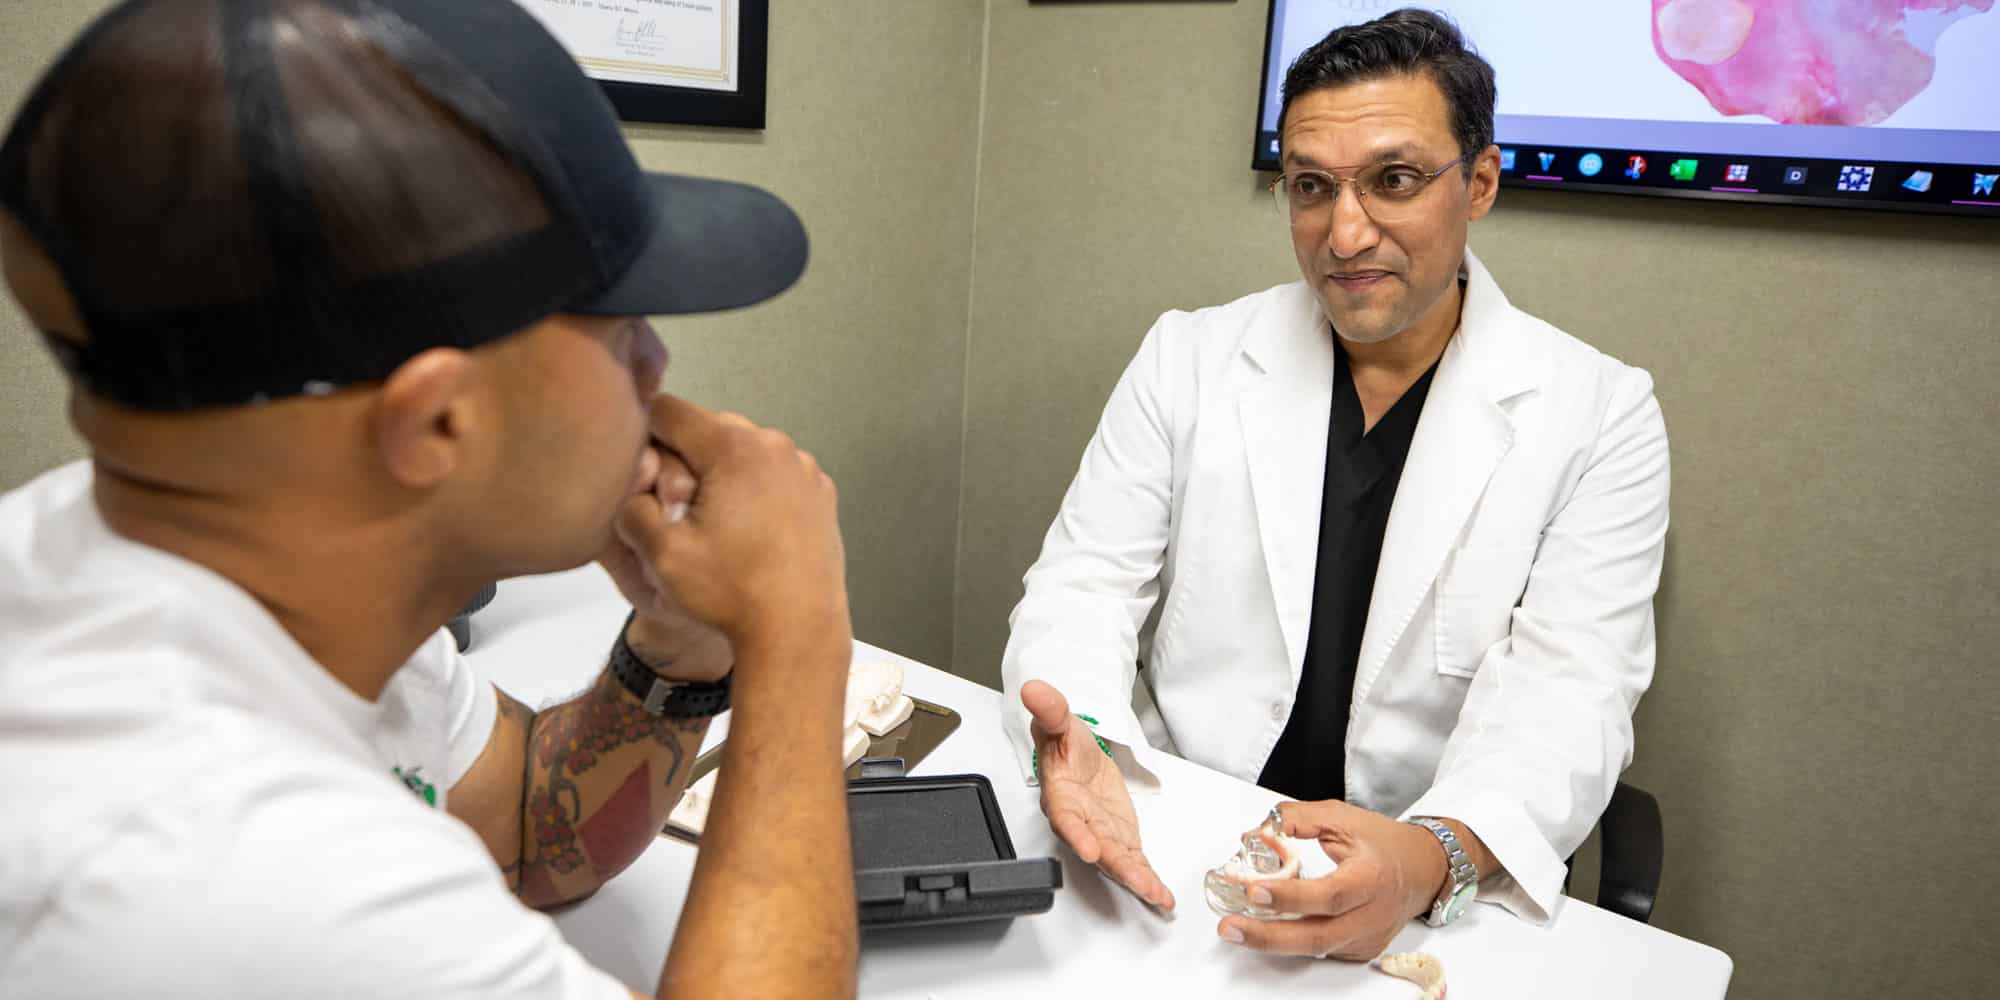 dr bhullars expertise shine sthrough as he explains implants